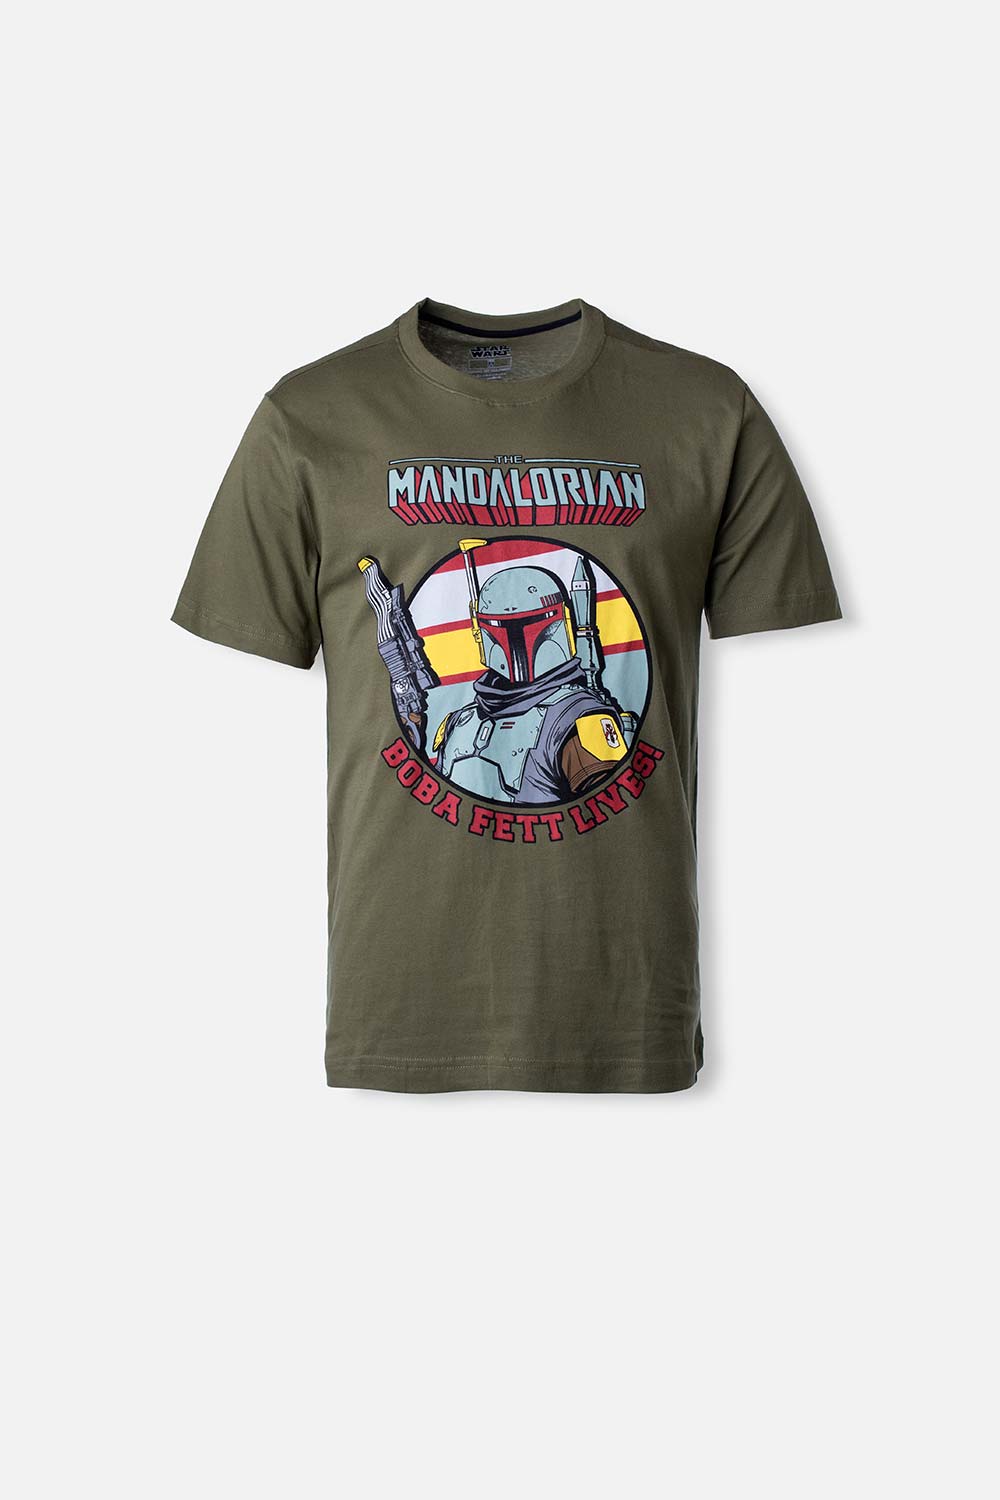 Camiseta de Mandalorian estampada verde militar para hombre S-0